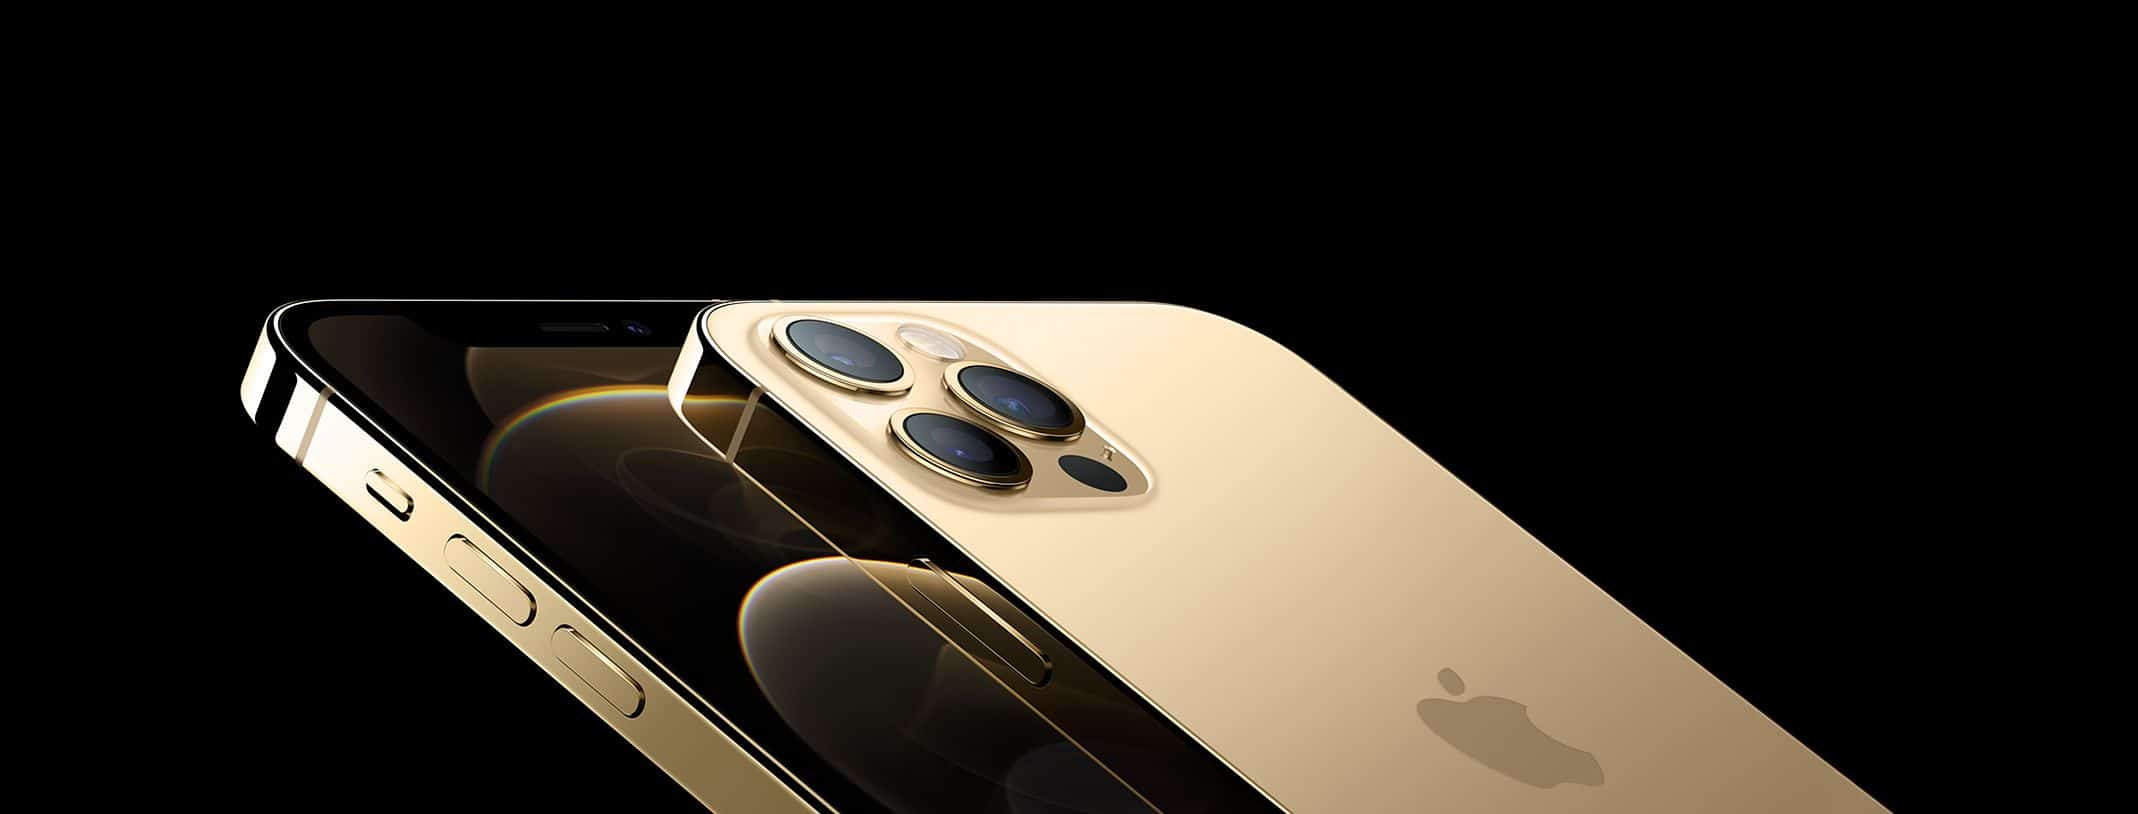 iPhone 12 Pro dourado